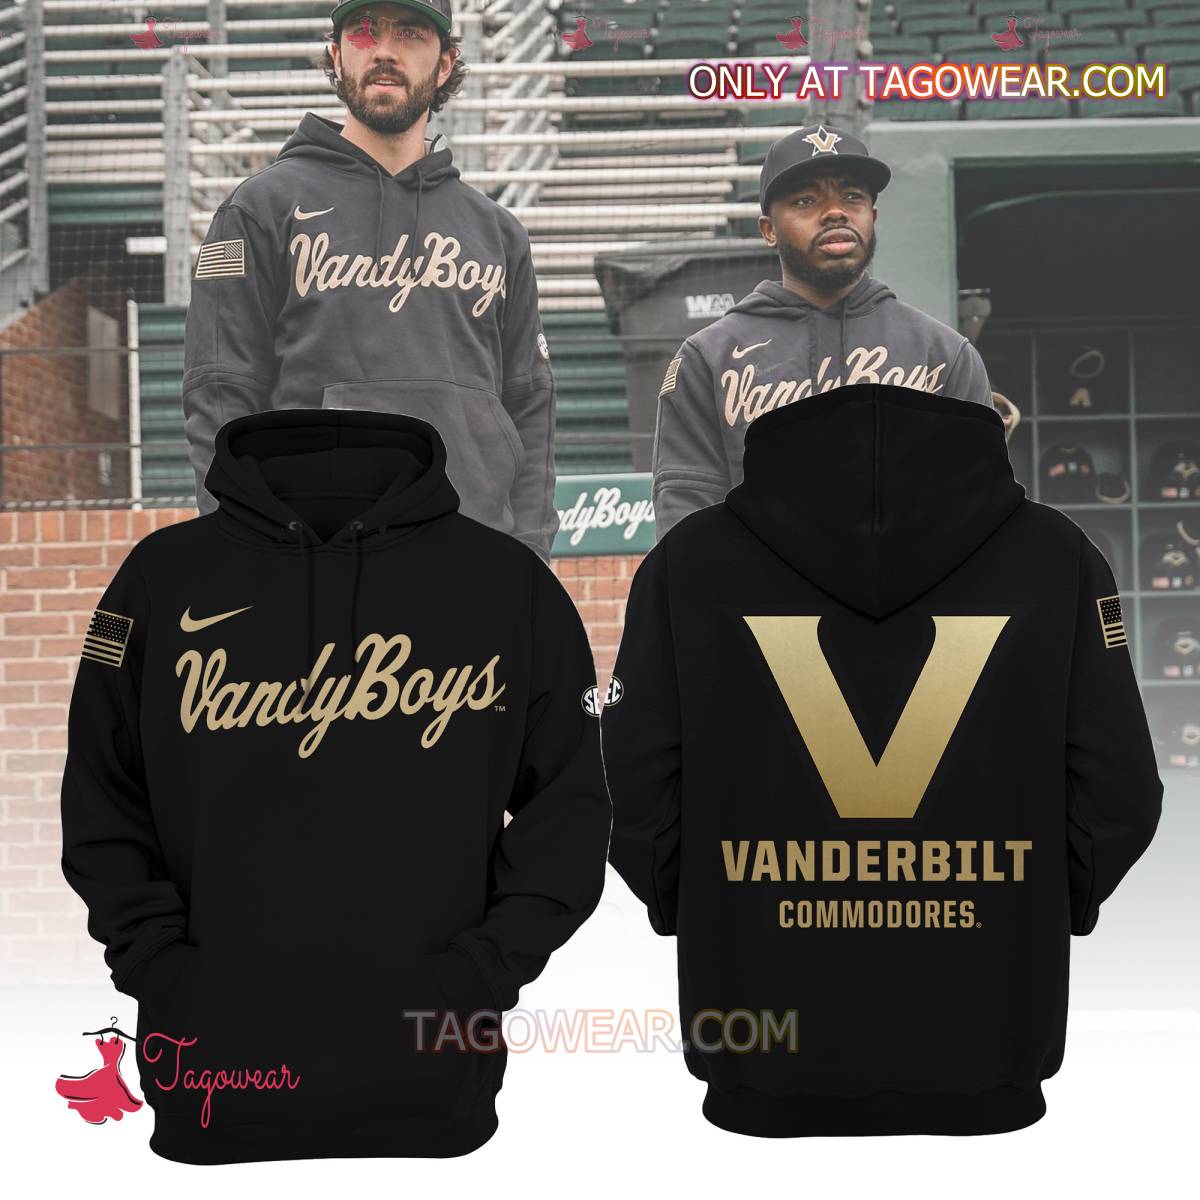 Vanderbilt Commodores Vandyboys Hoodie